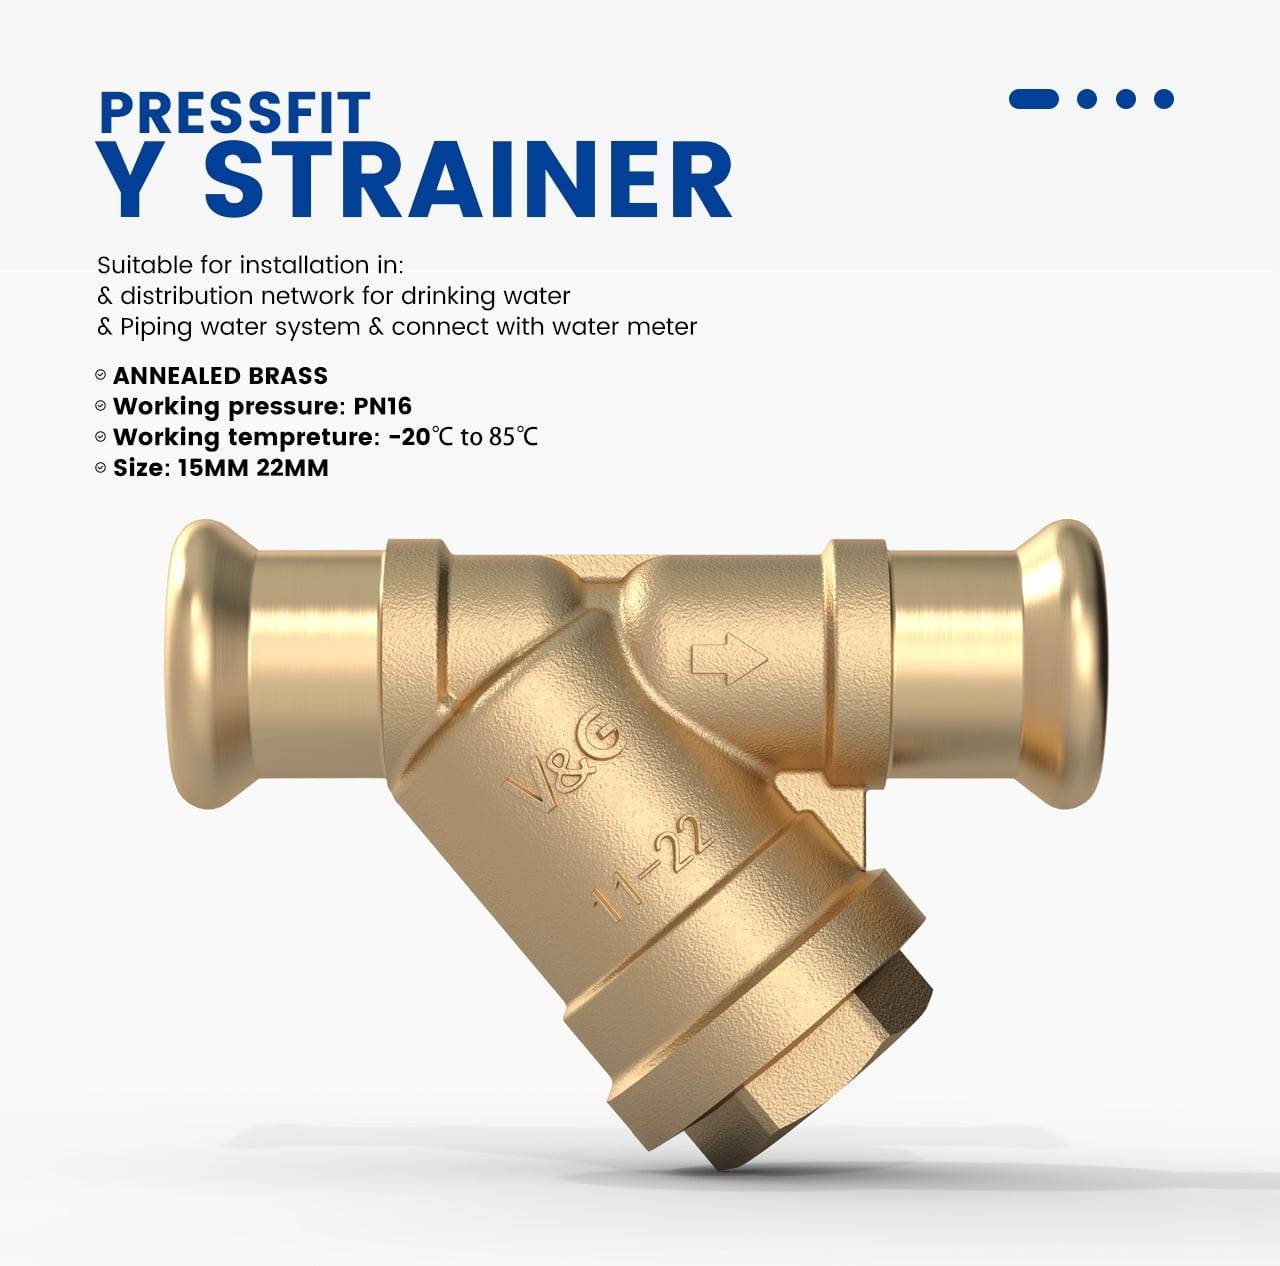 Press-fit Y strainer